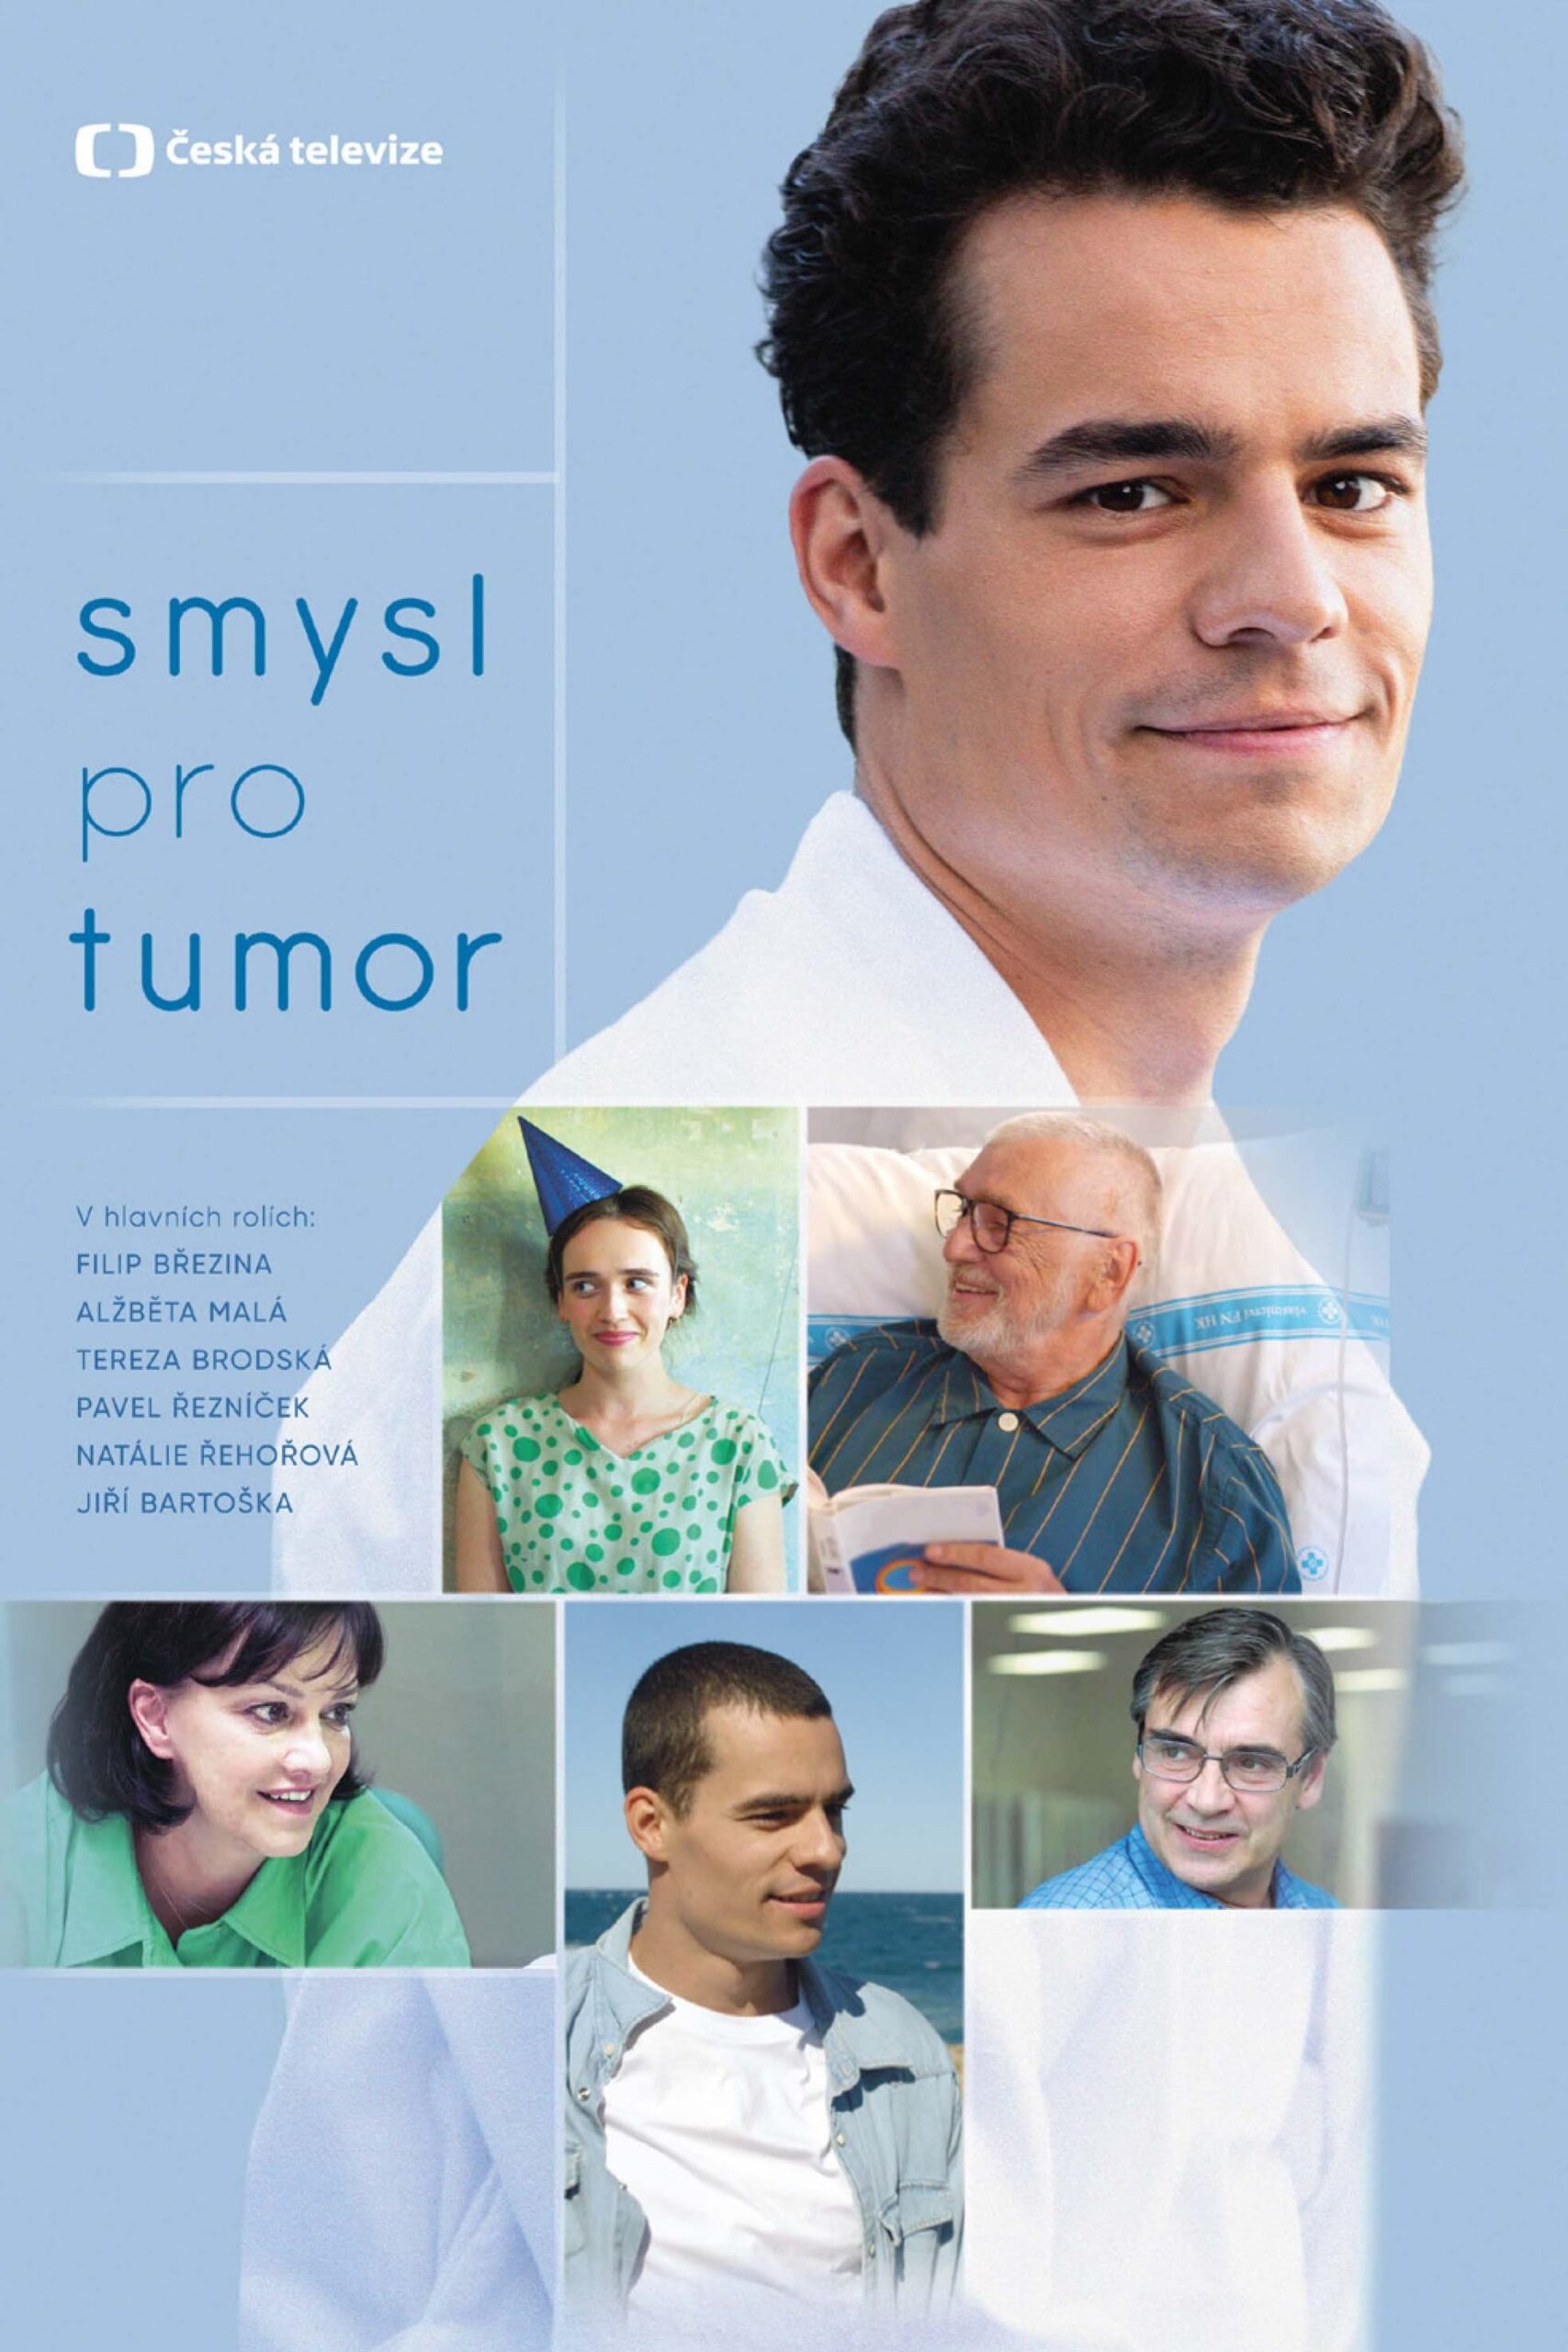 Plakát pro film “Smysl pro tumor”